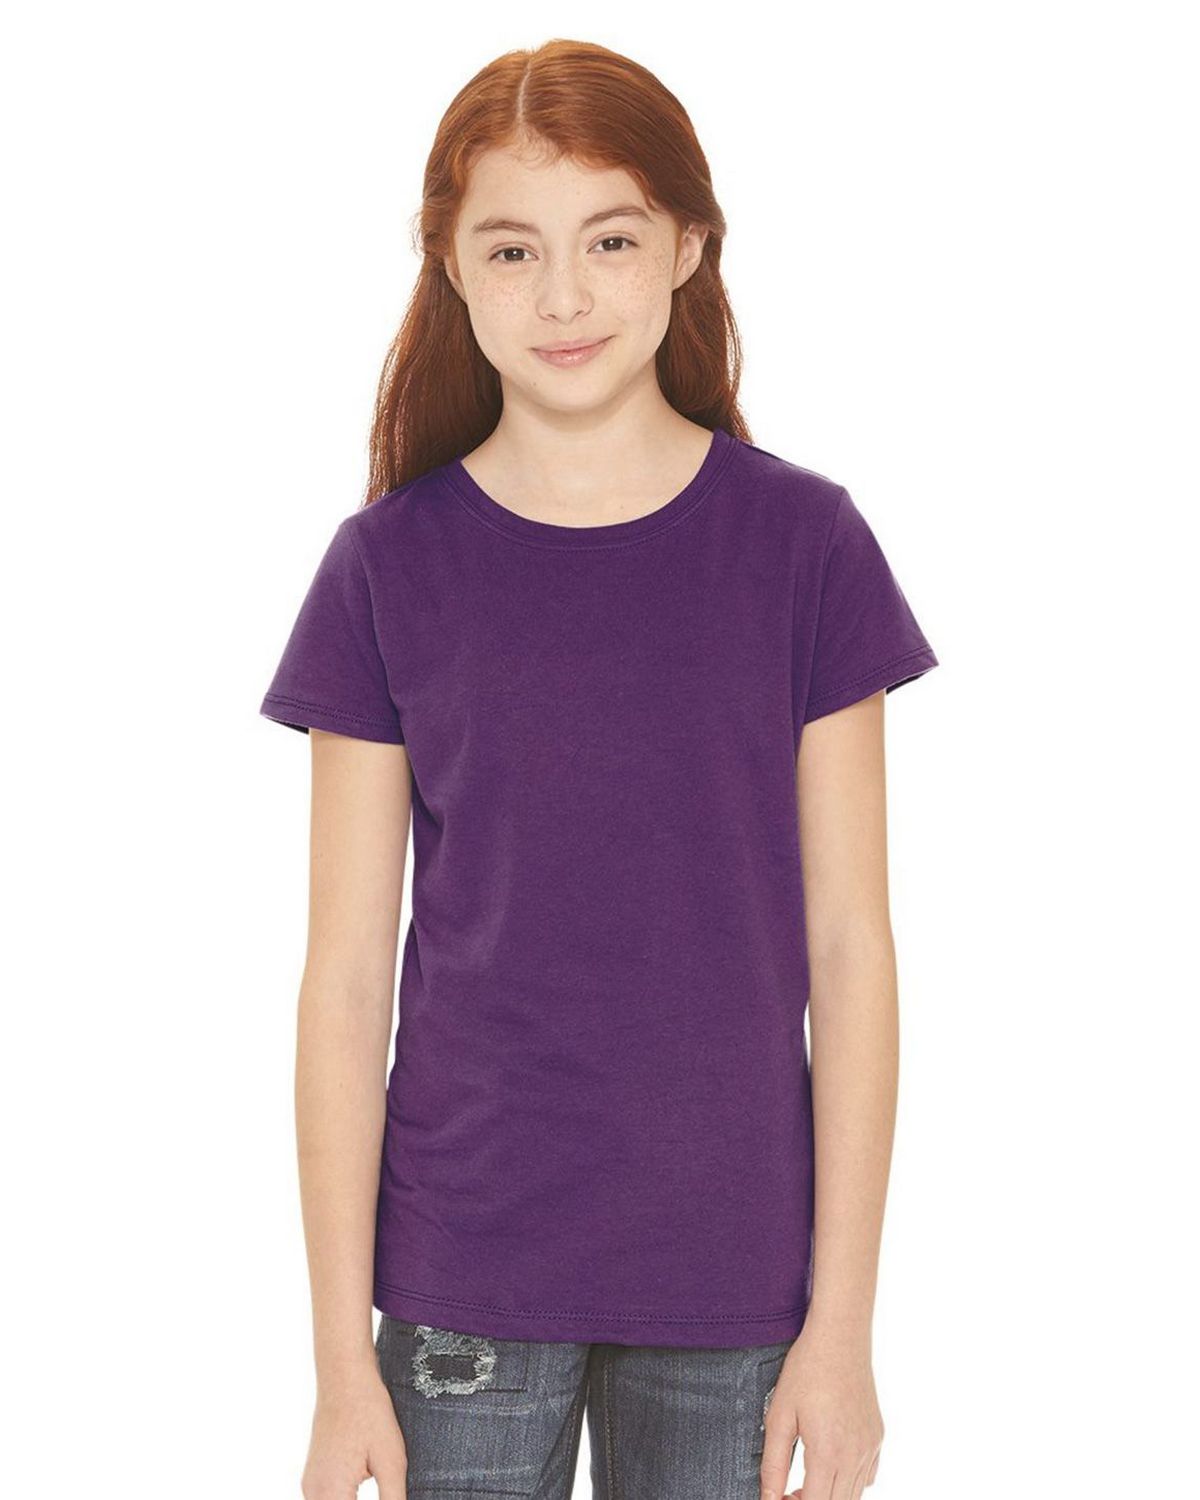 Personalized Custom Text Print Next Level Girls Soft Princess Tee T-Shirt 3710